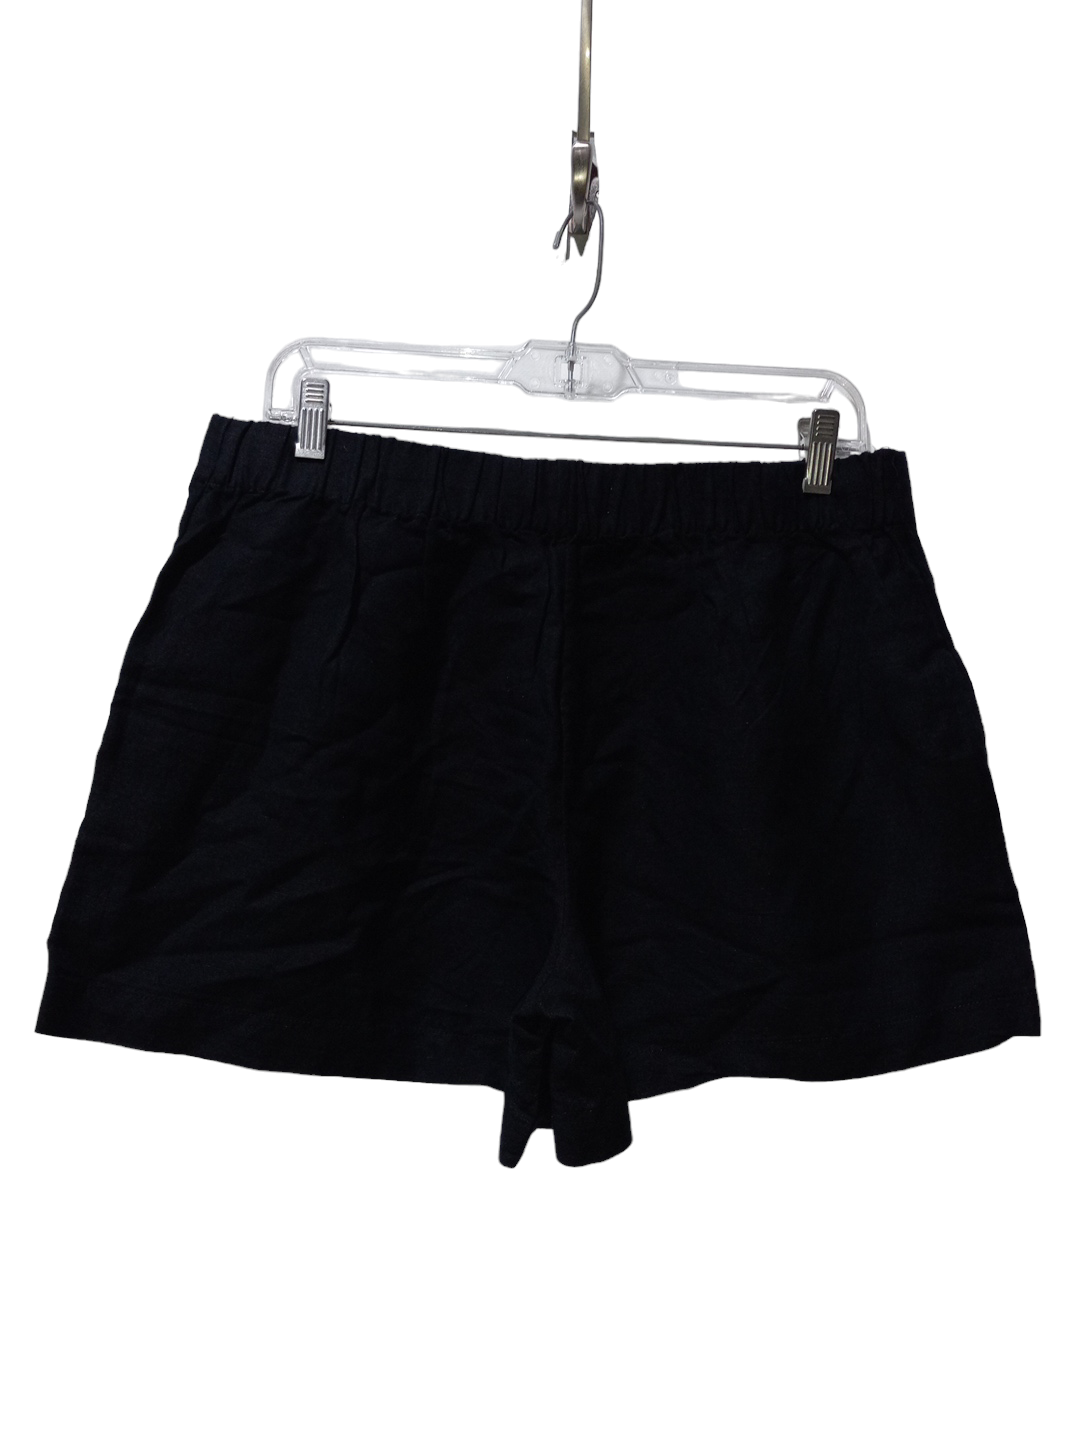 Black Shorts Loft, Size M